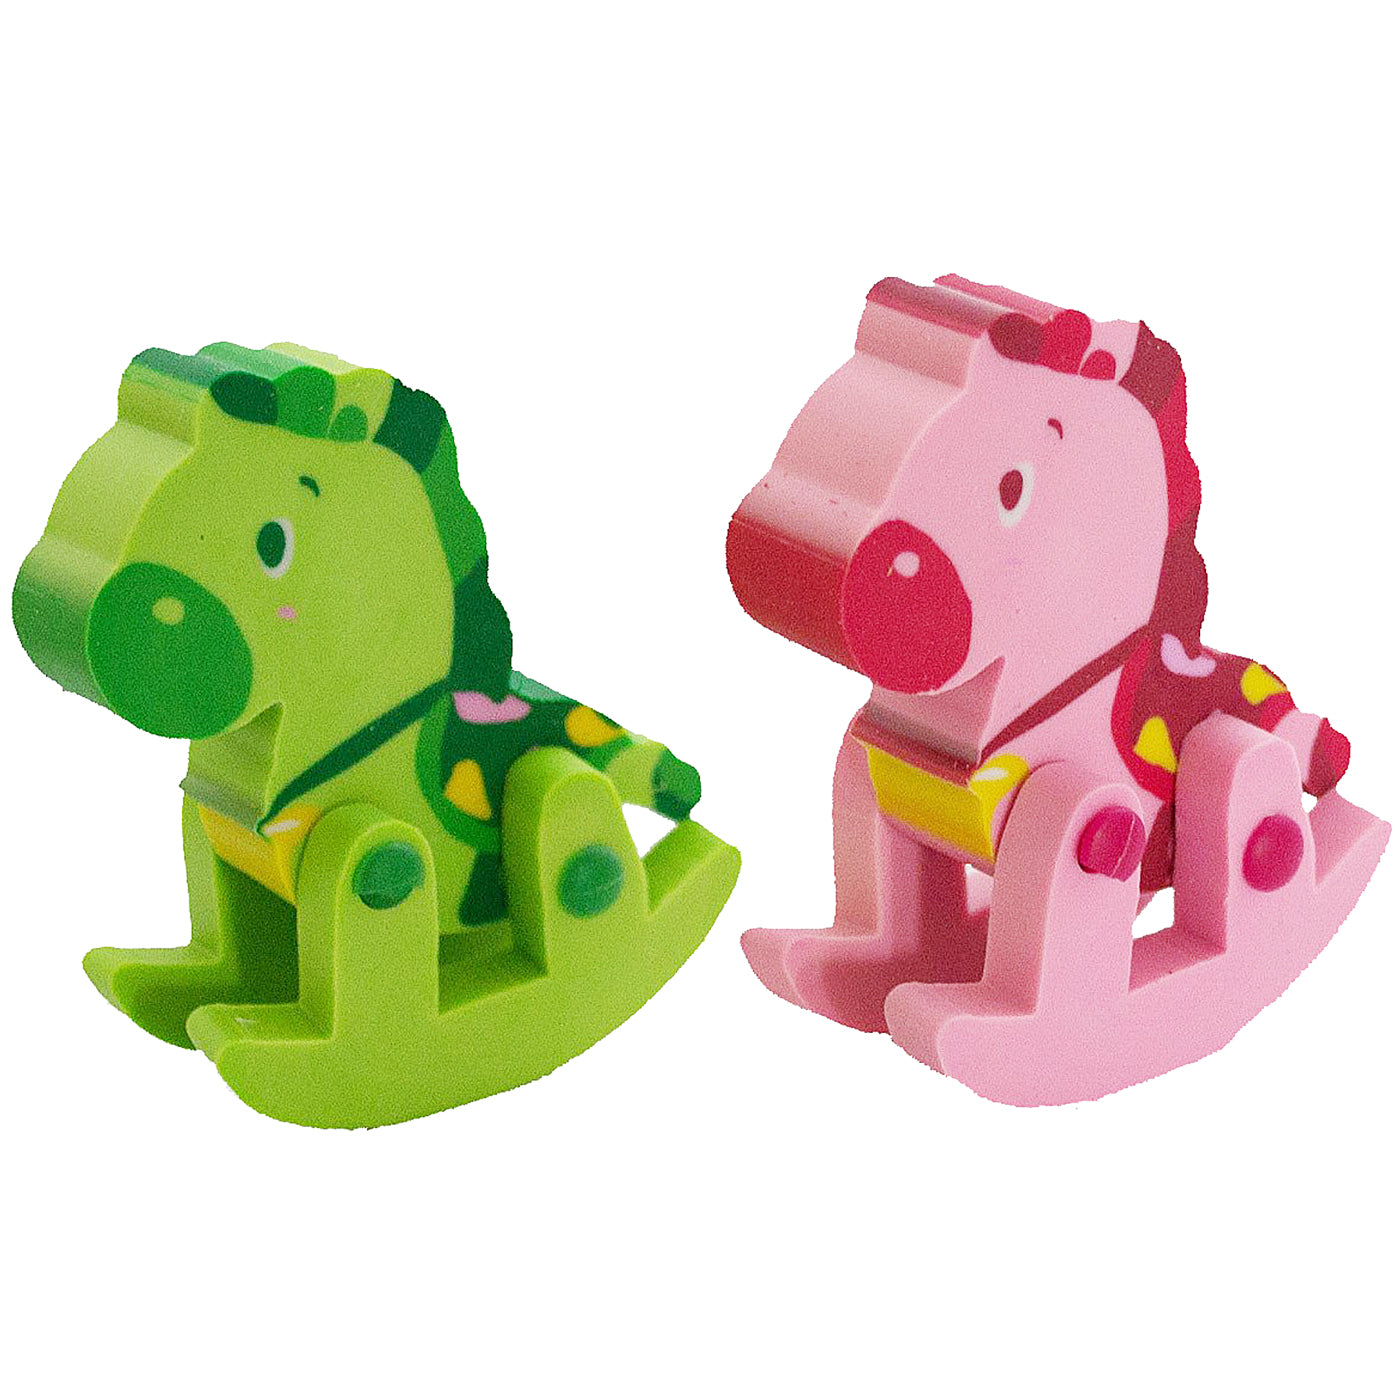 Fancy Eraser Rocking Horse Set of 2 Pink and Green